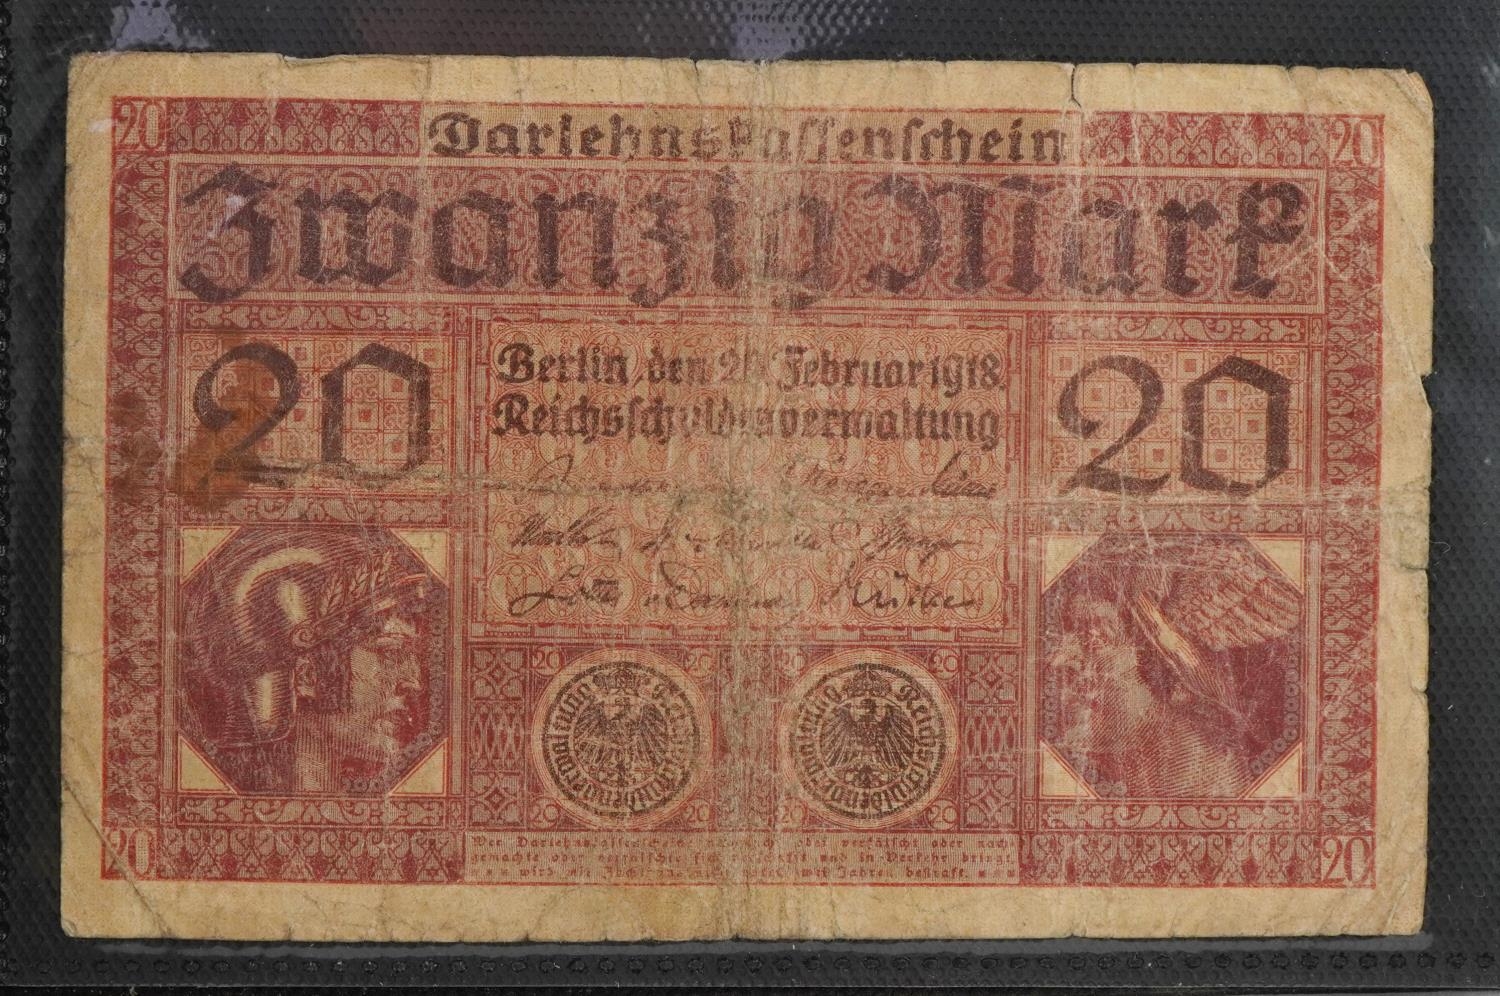 World banknotes arranged in an album including Bank of Scotland twenty pounds, Kenya, Indonesia - Image 8 of 10